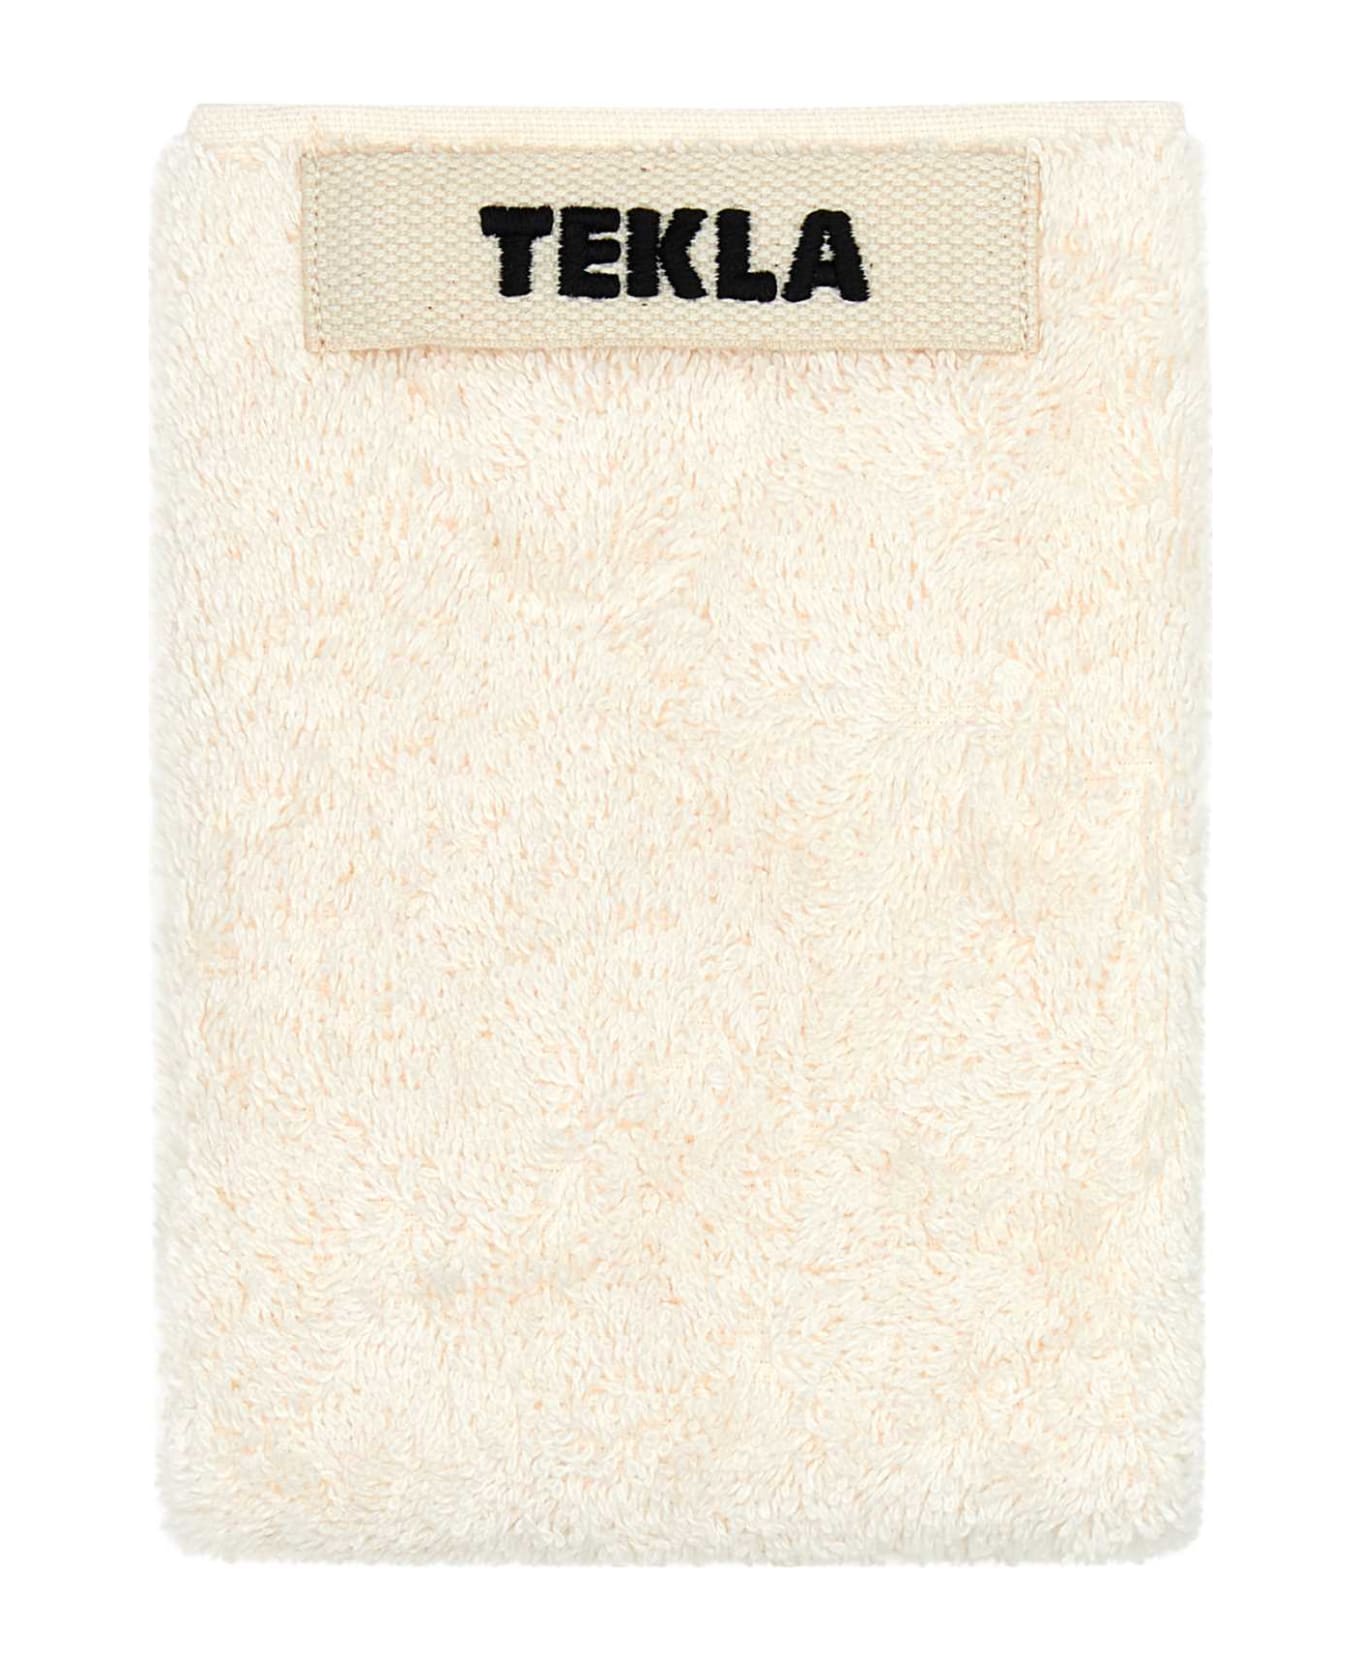 Tekla Ivory Terry Towel - IVORY